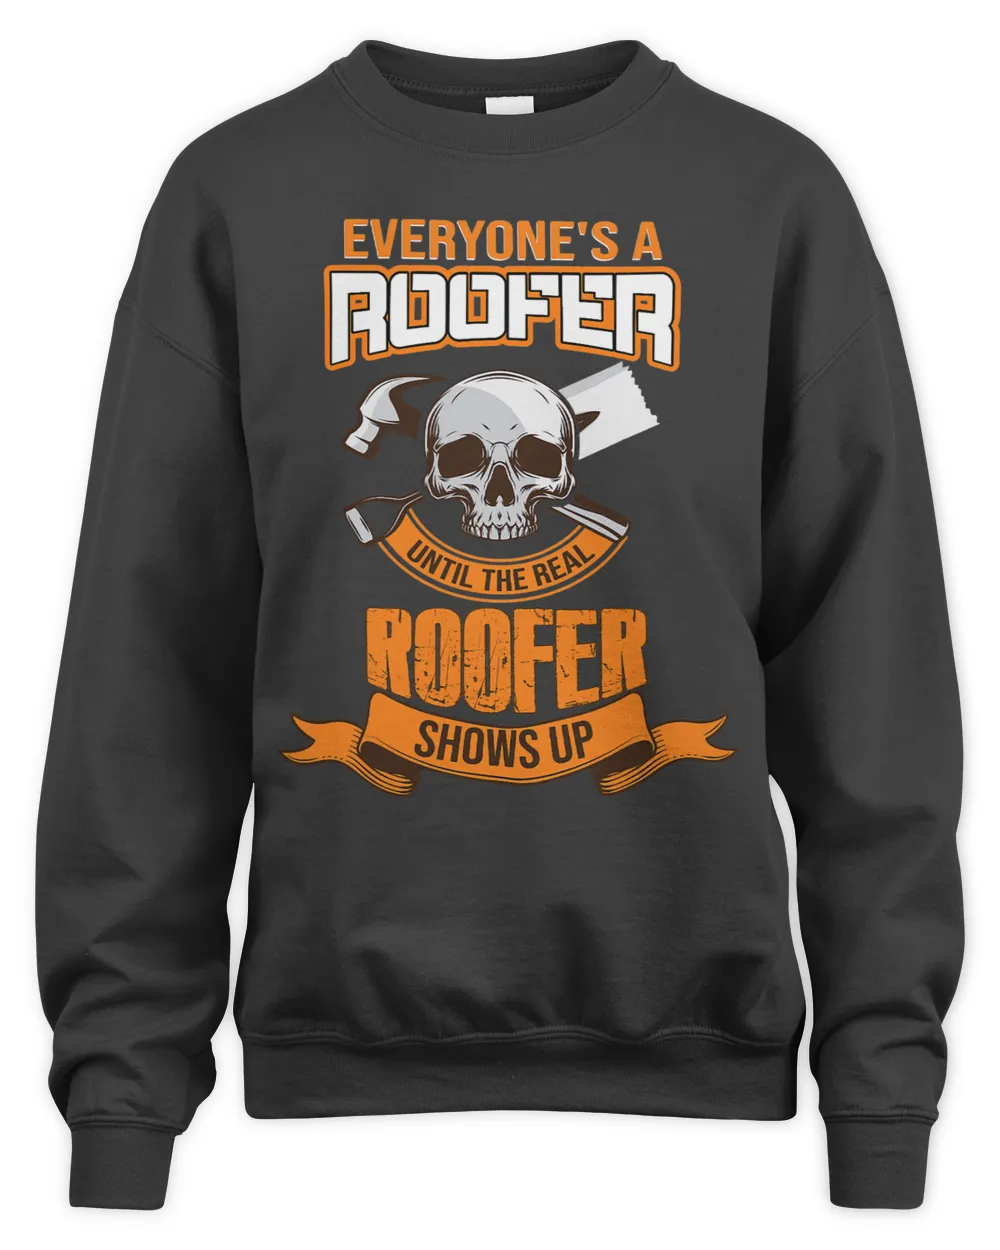 Roofer Everyones A Roofer Until The Real Roofer Shows Up